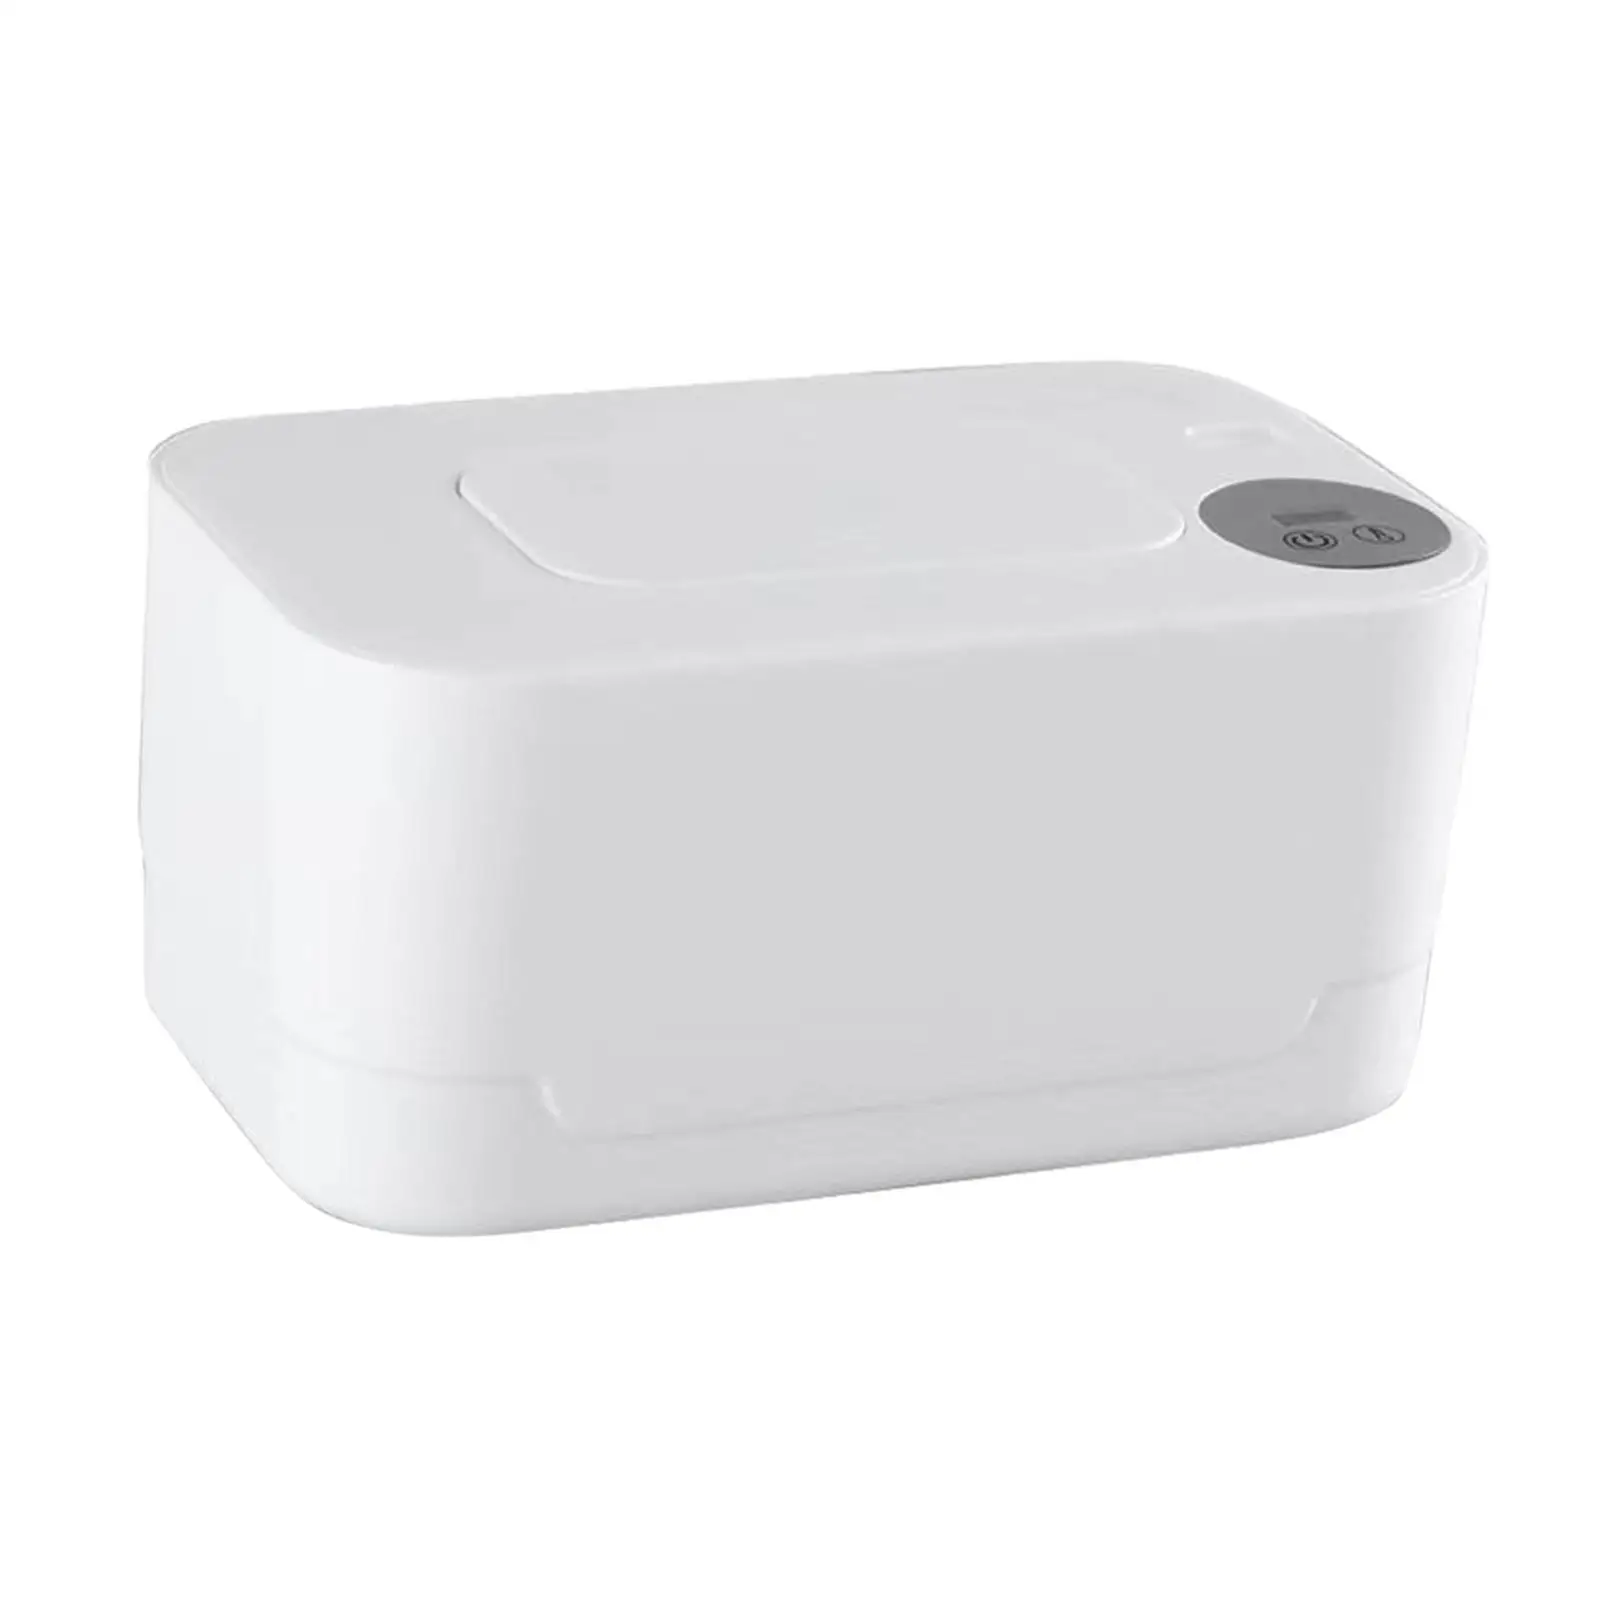 Wipe Warmer Reusable Napkin Heating Box Cover Tissue Paper Warmer Wipe Dispenser Box for Hotel Household Outdoor Travel Bathroom